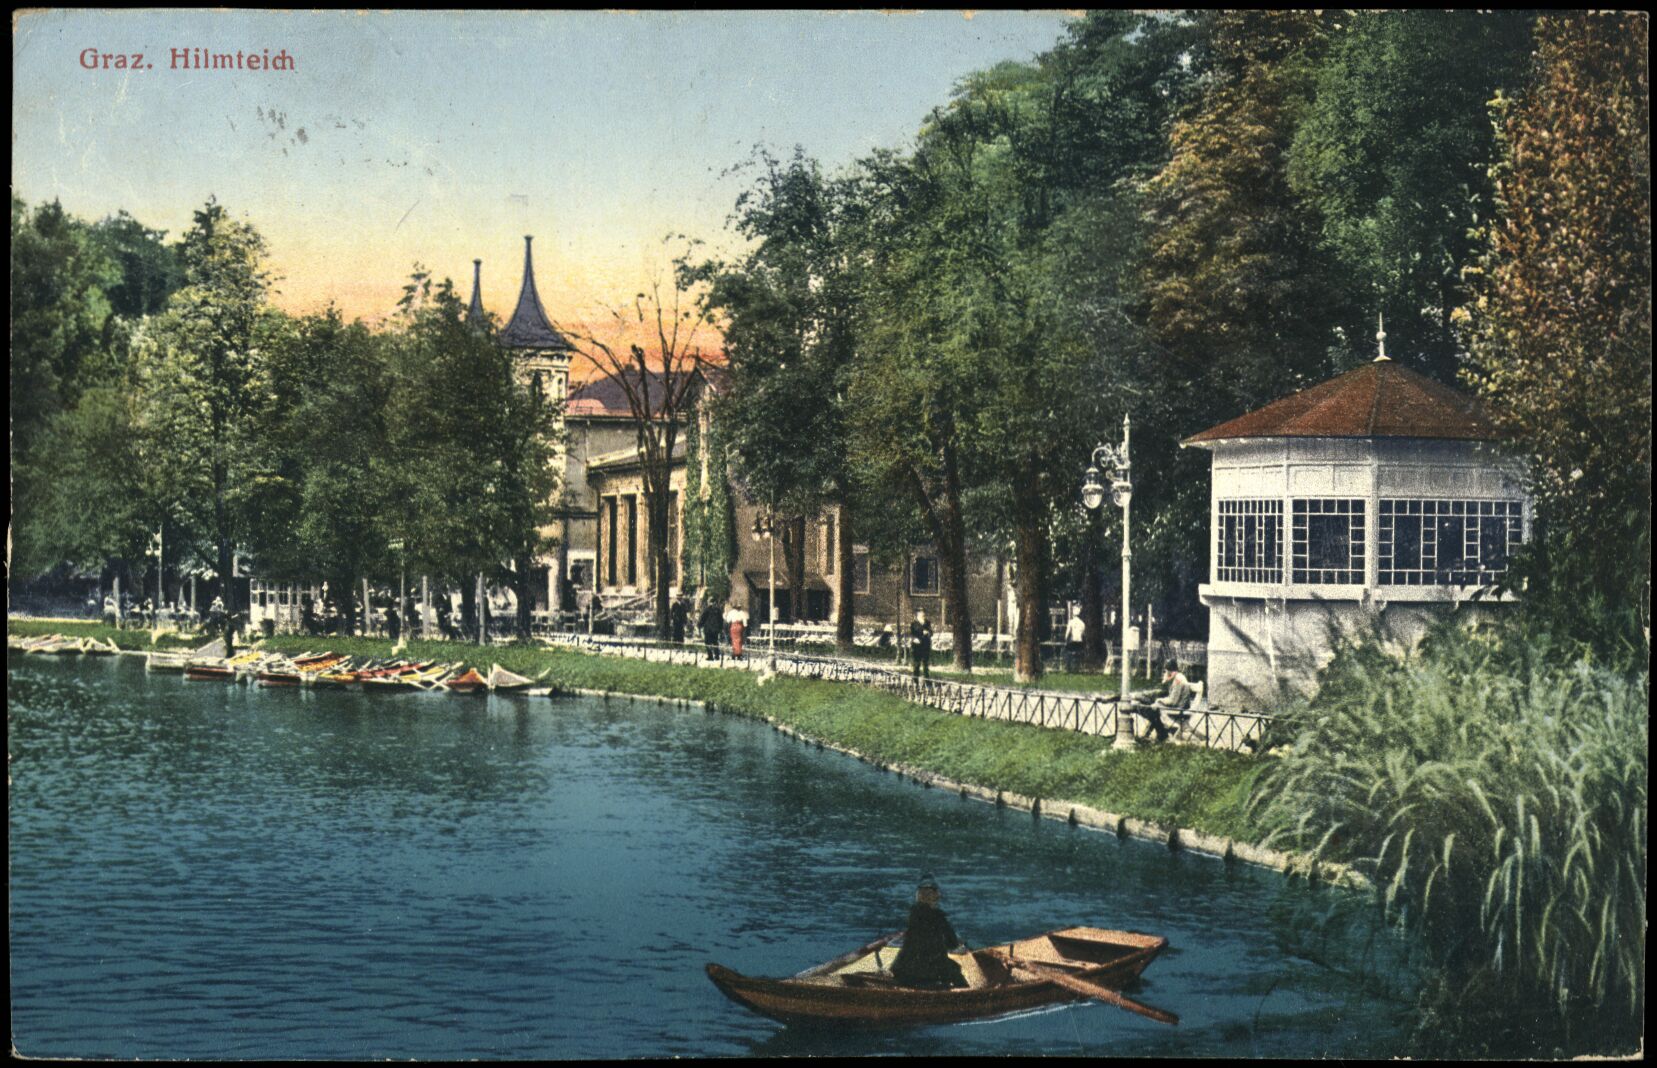 Graz, Hilmteich; 1914; Österreichische Nationalbibliothek. Ansichtskarten online. httpdata.onb.ac.atAKONAK019_443